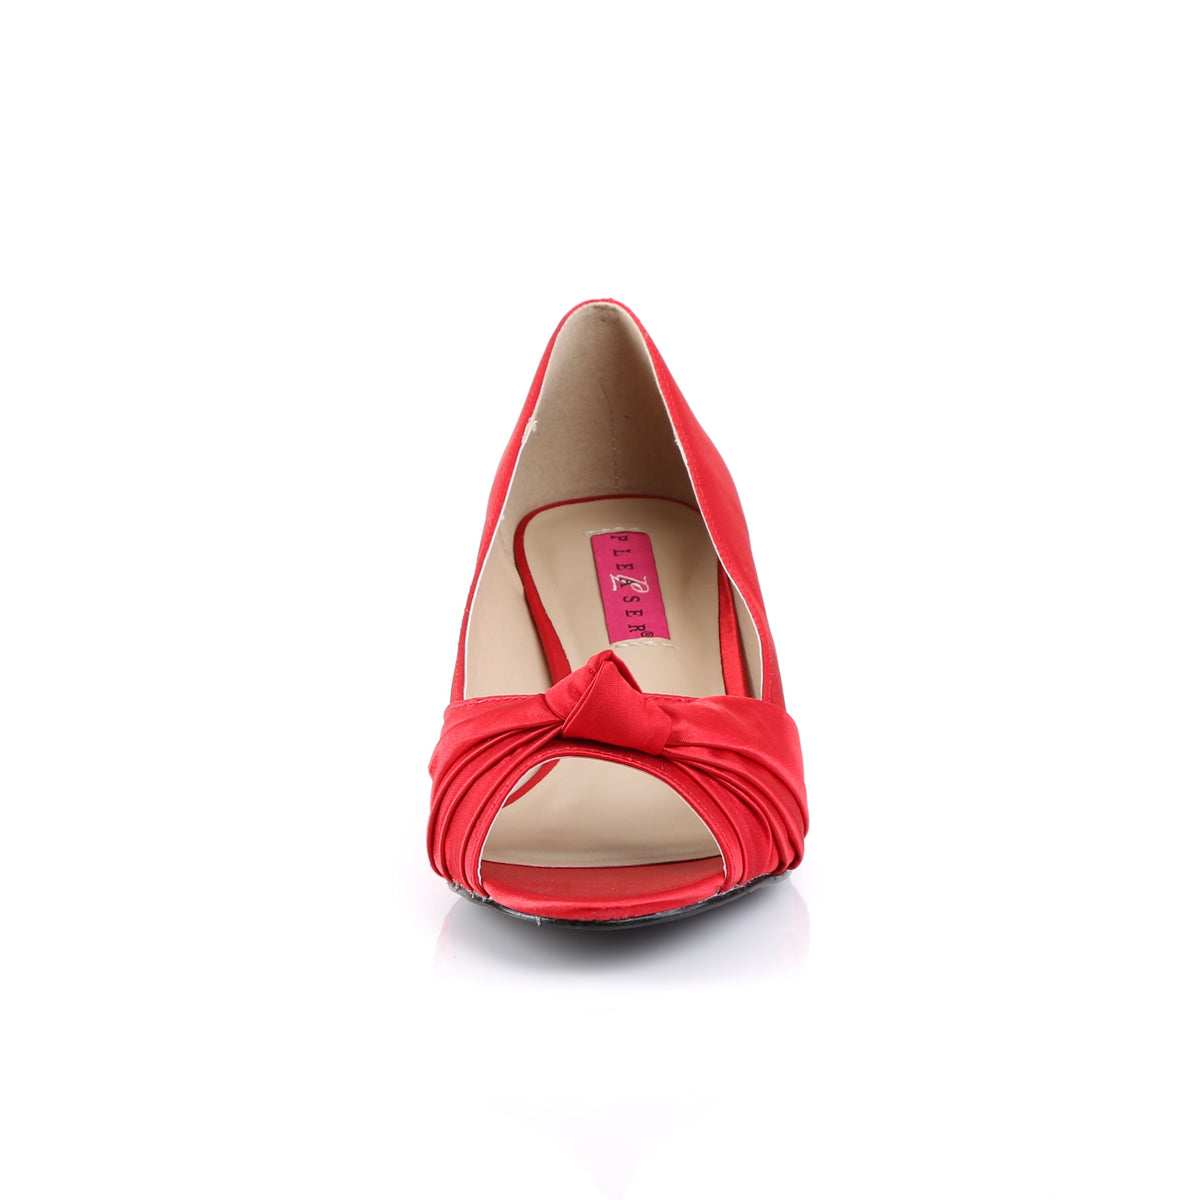 FAB-422 Pleaser Pink Label 2" Heel Red Satin Fetish Footwear-Pleaser Pink Label- Drag Queen Shoes